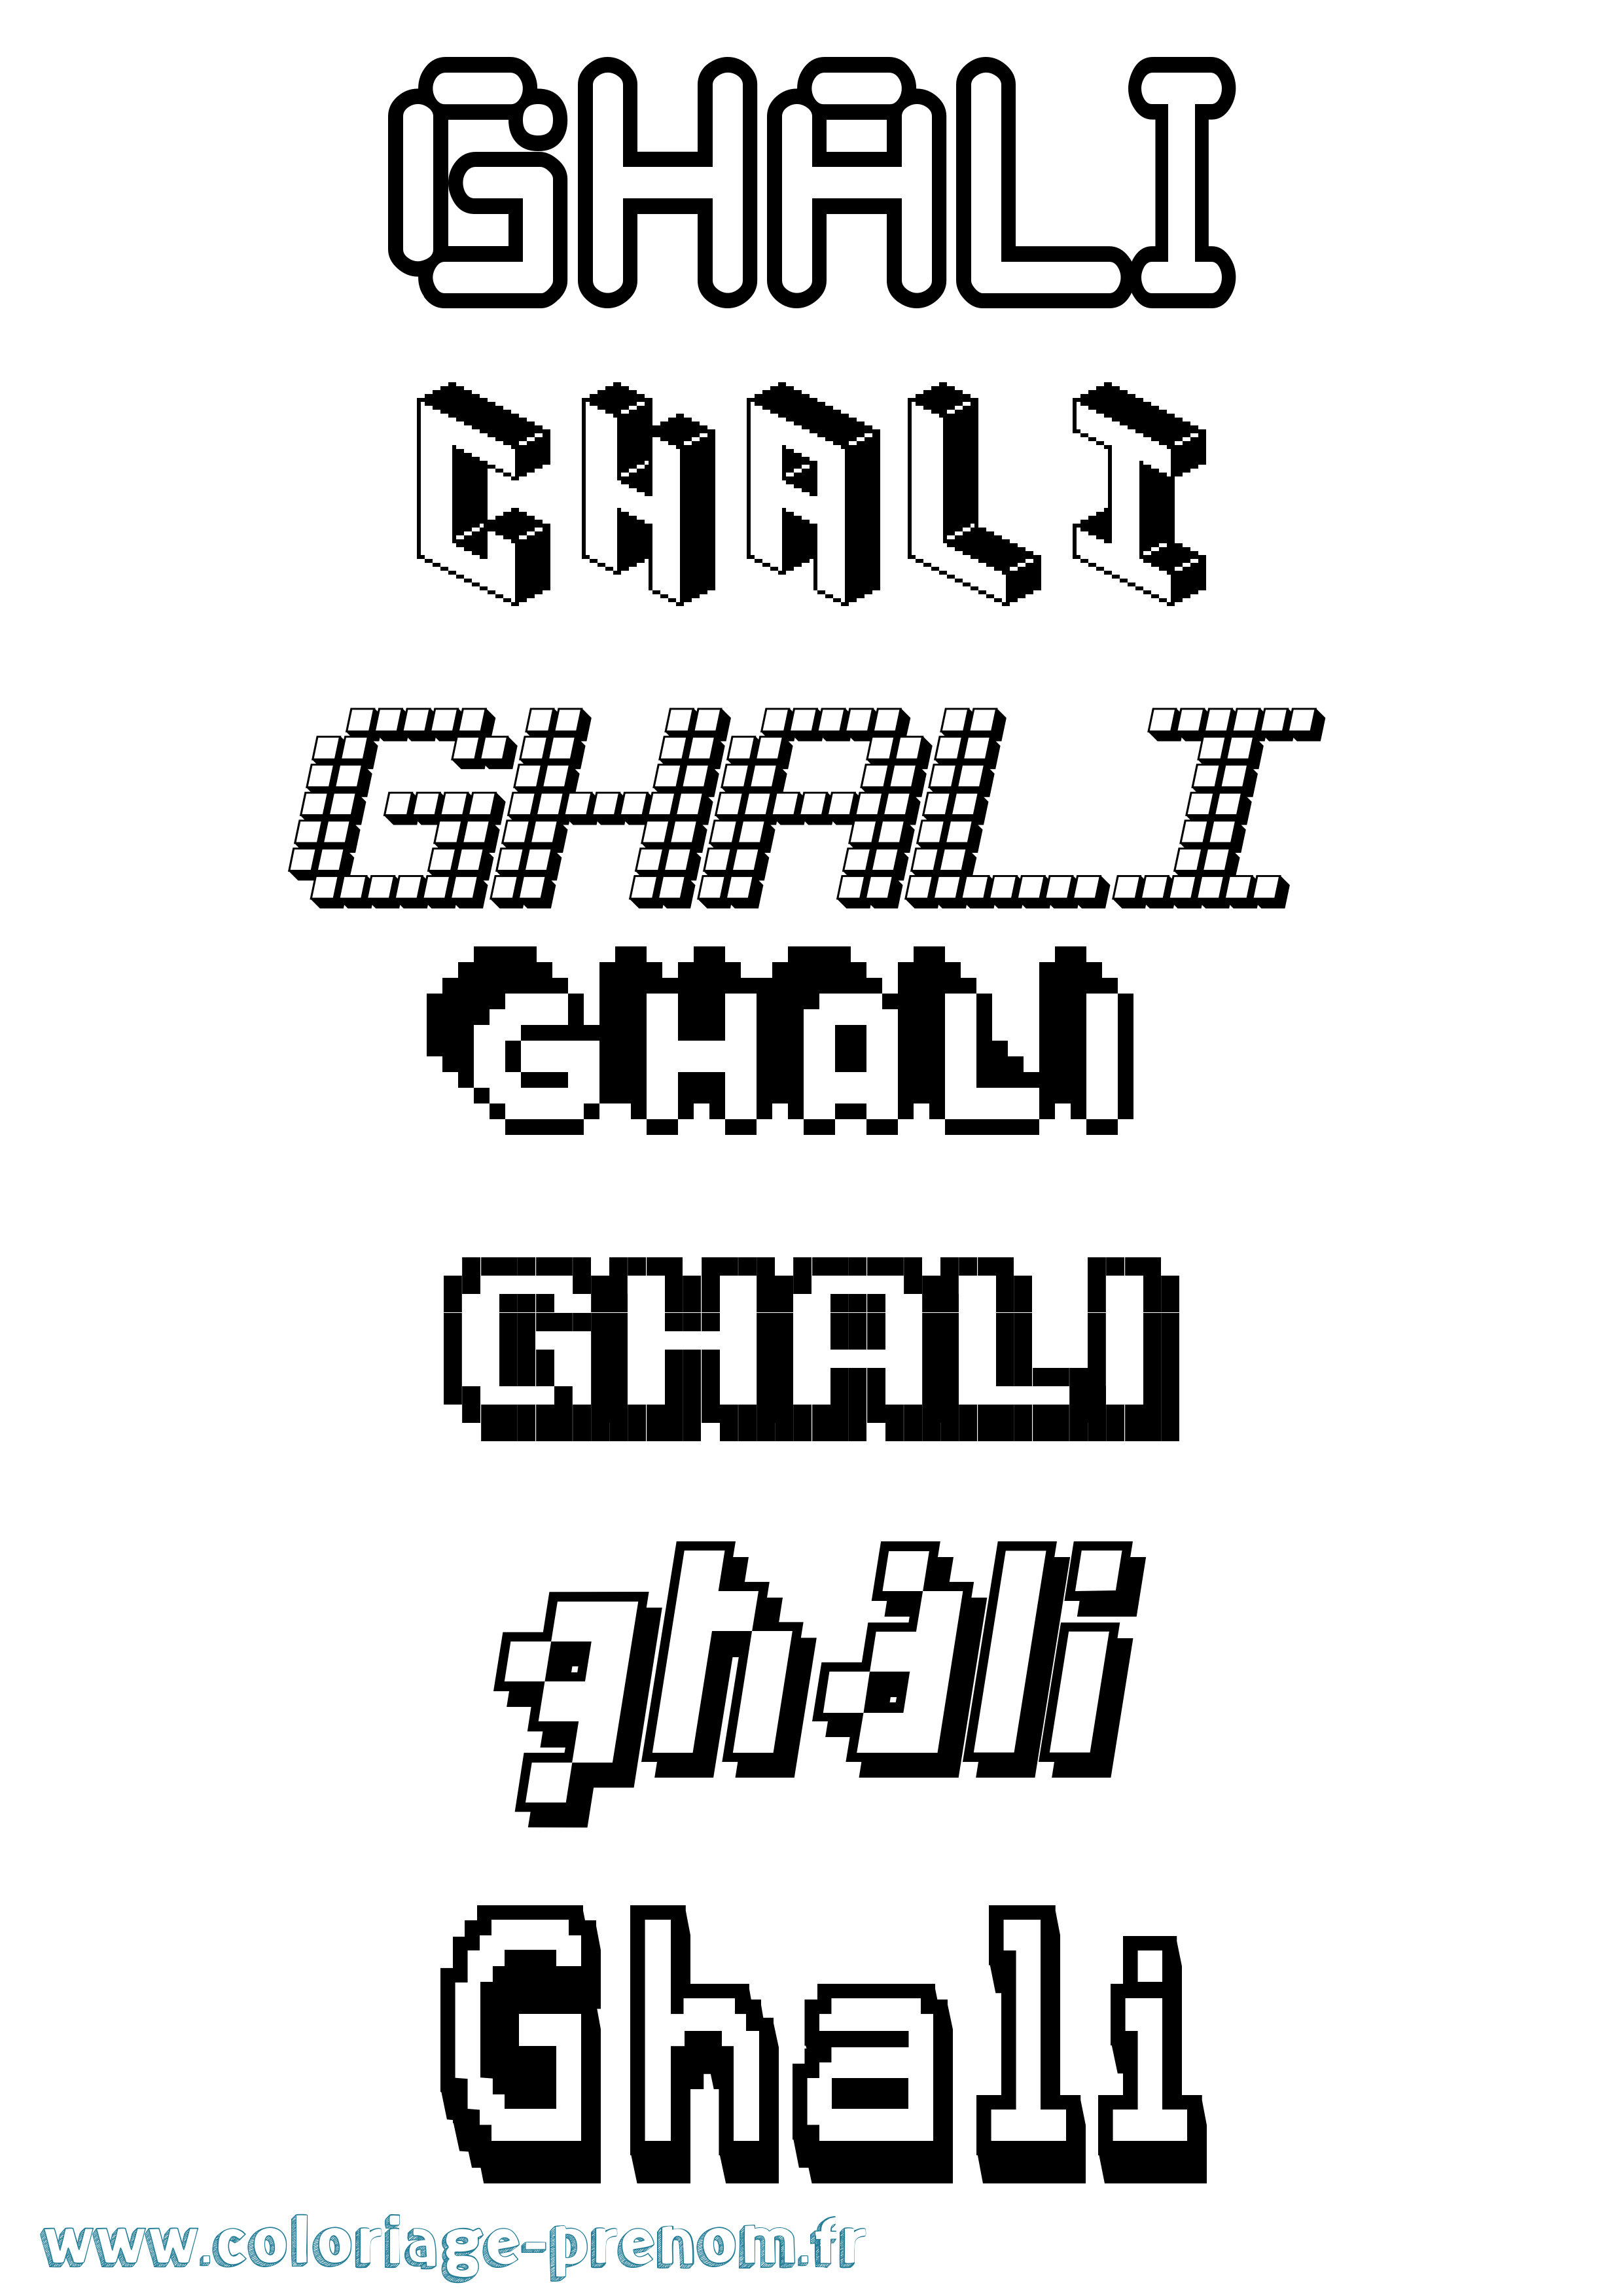 Coloriage prénom Ghali Pixel